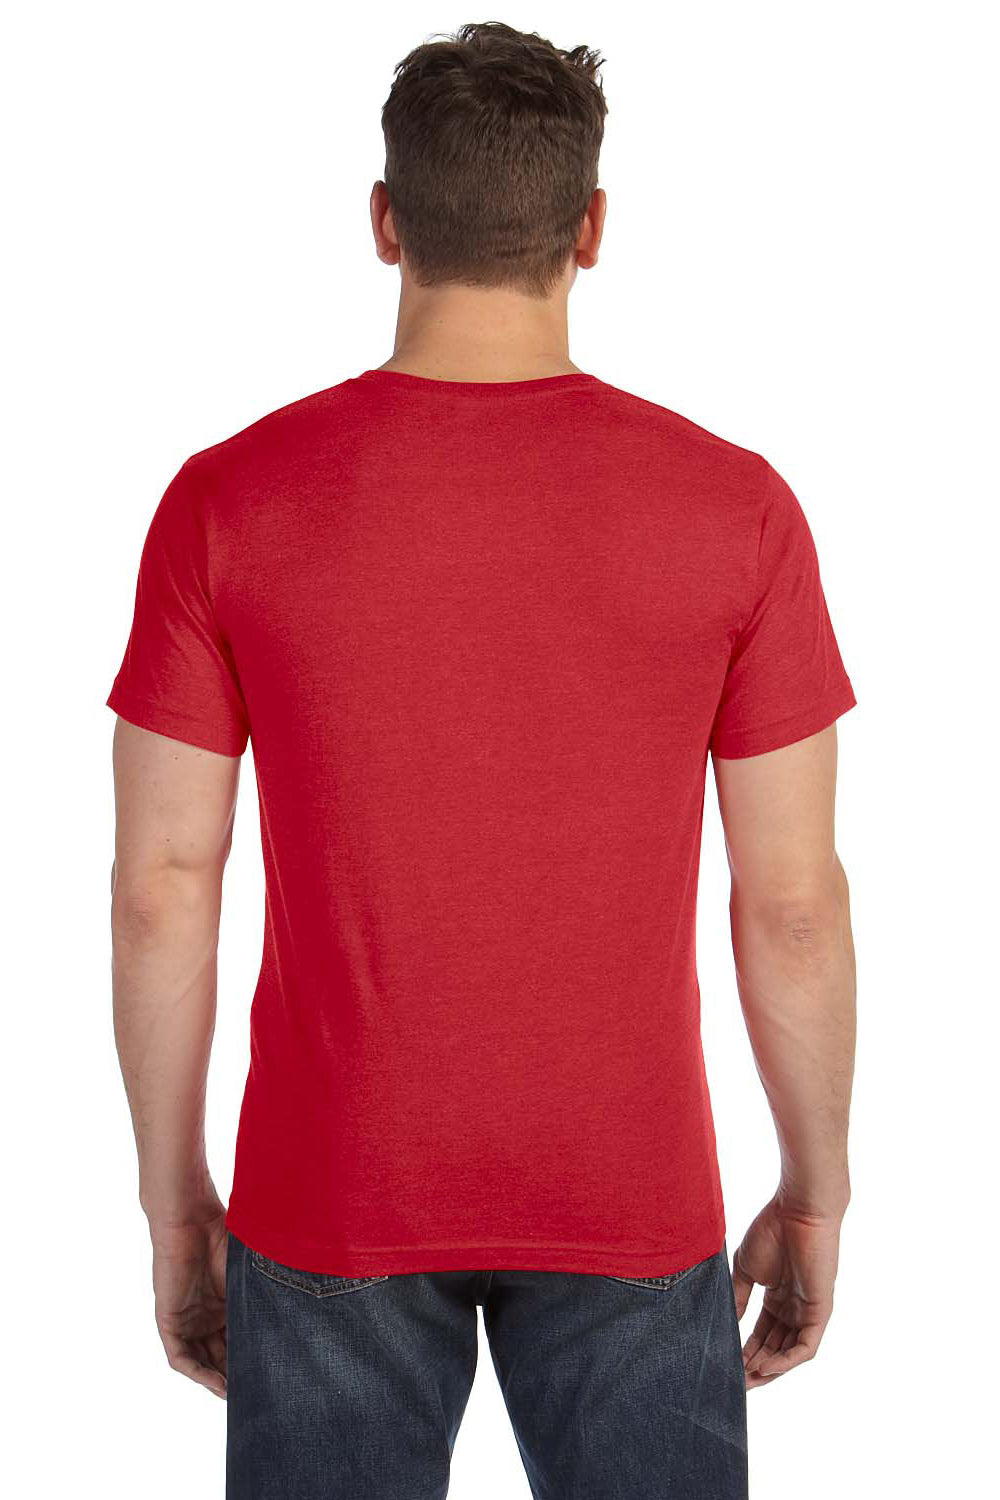 LAT 6905 Mens Fine Jersey Short Sleeve Crewneck T-Shirt Red Back